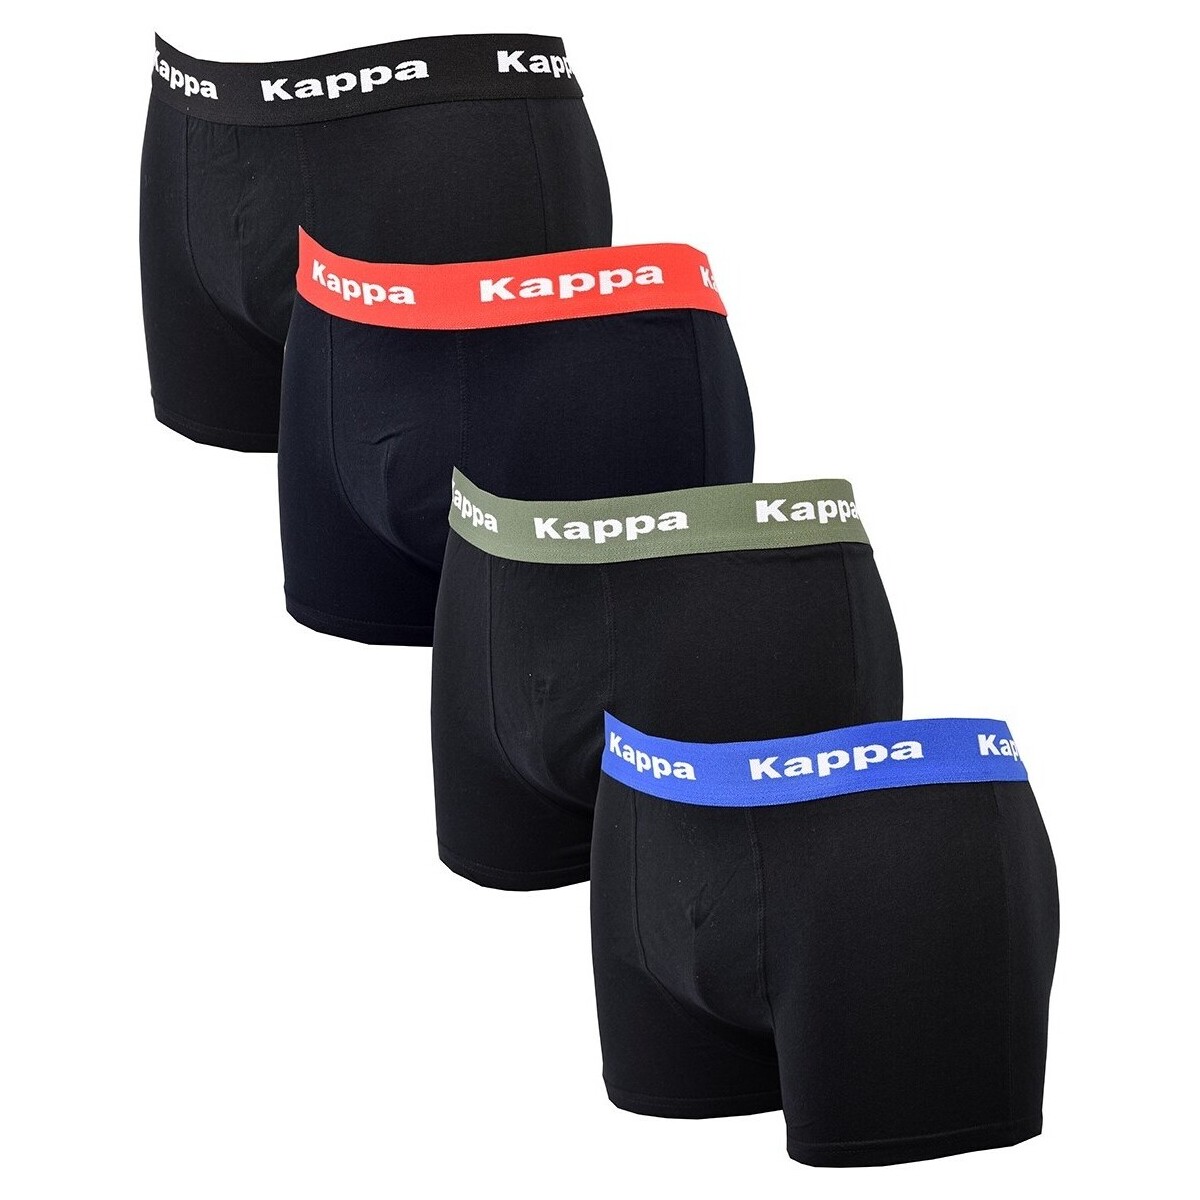 Kappa Multicolore Pack de 4 Boxers 0598 0nTtOp0W